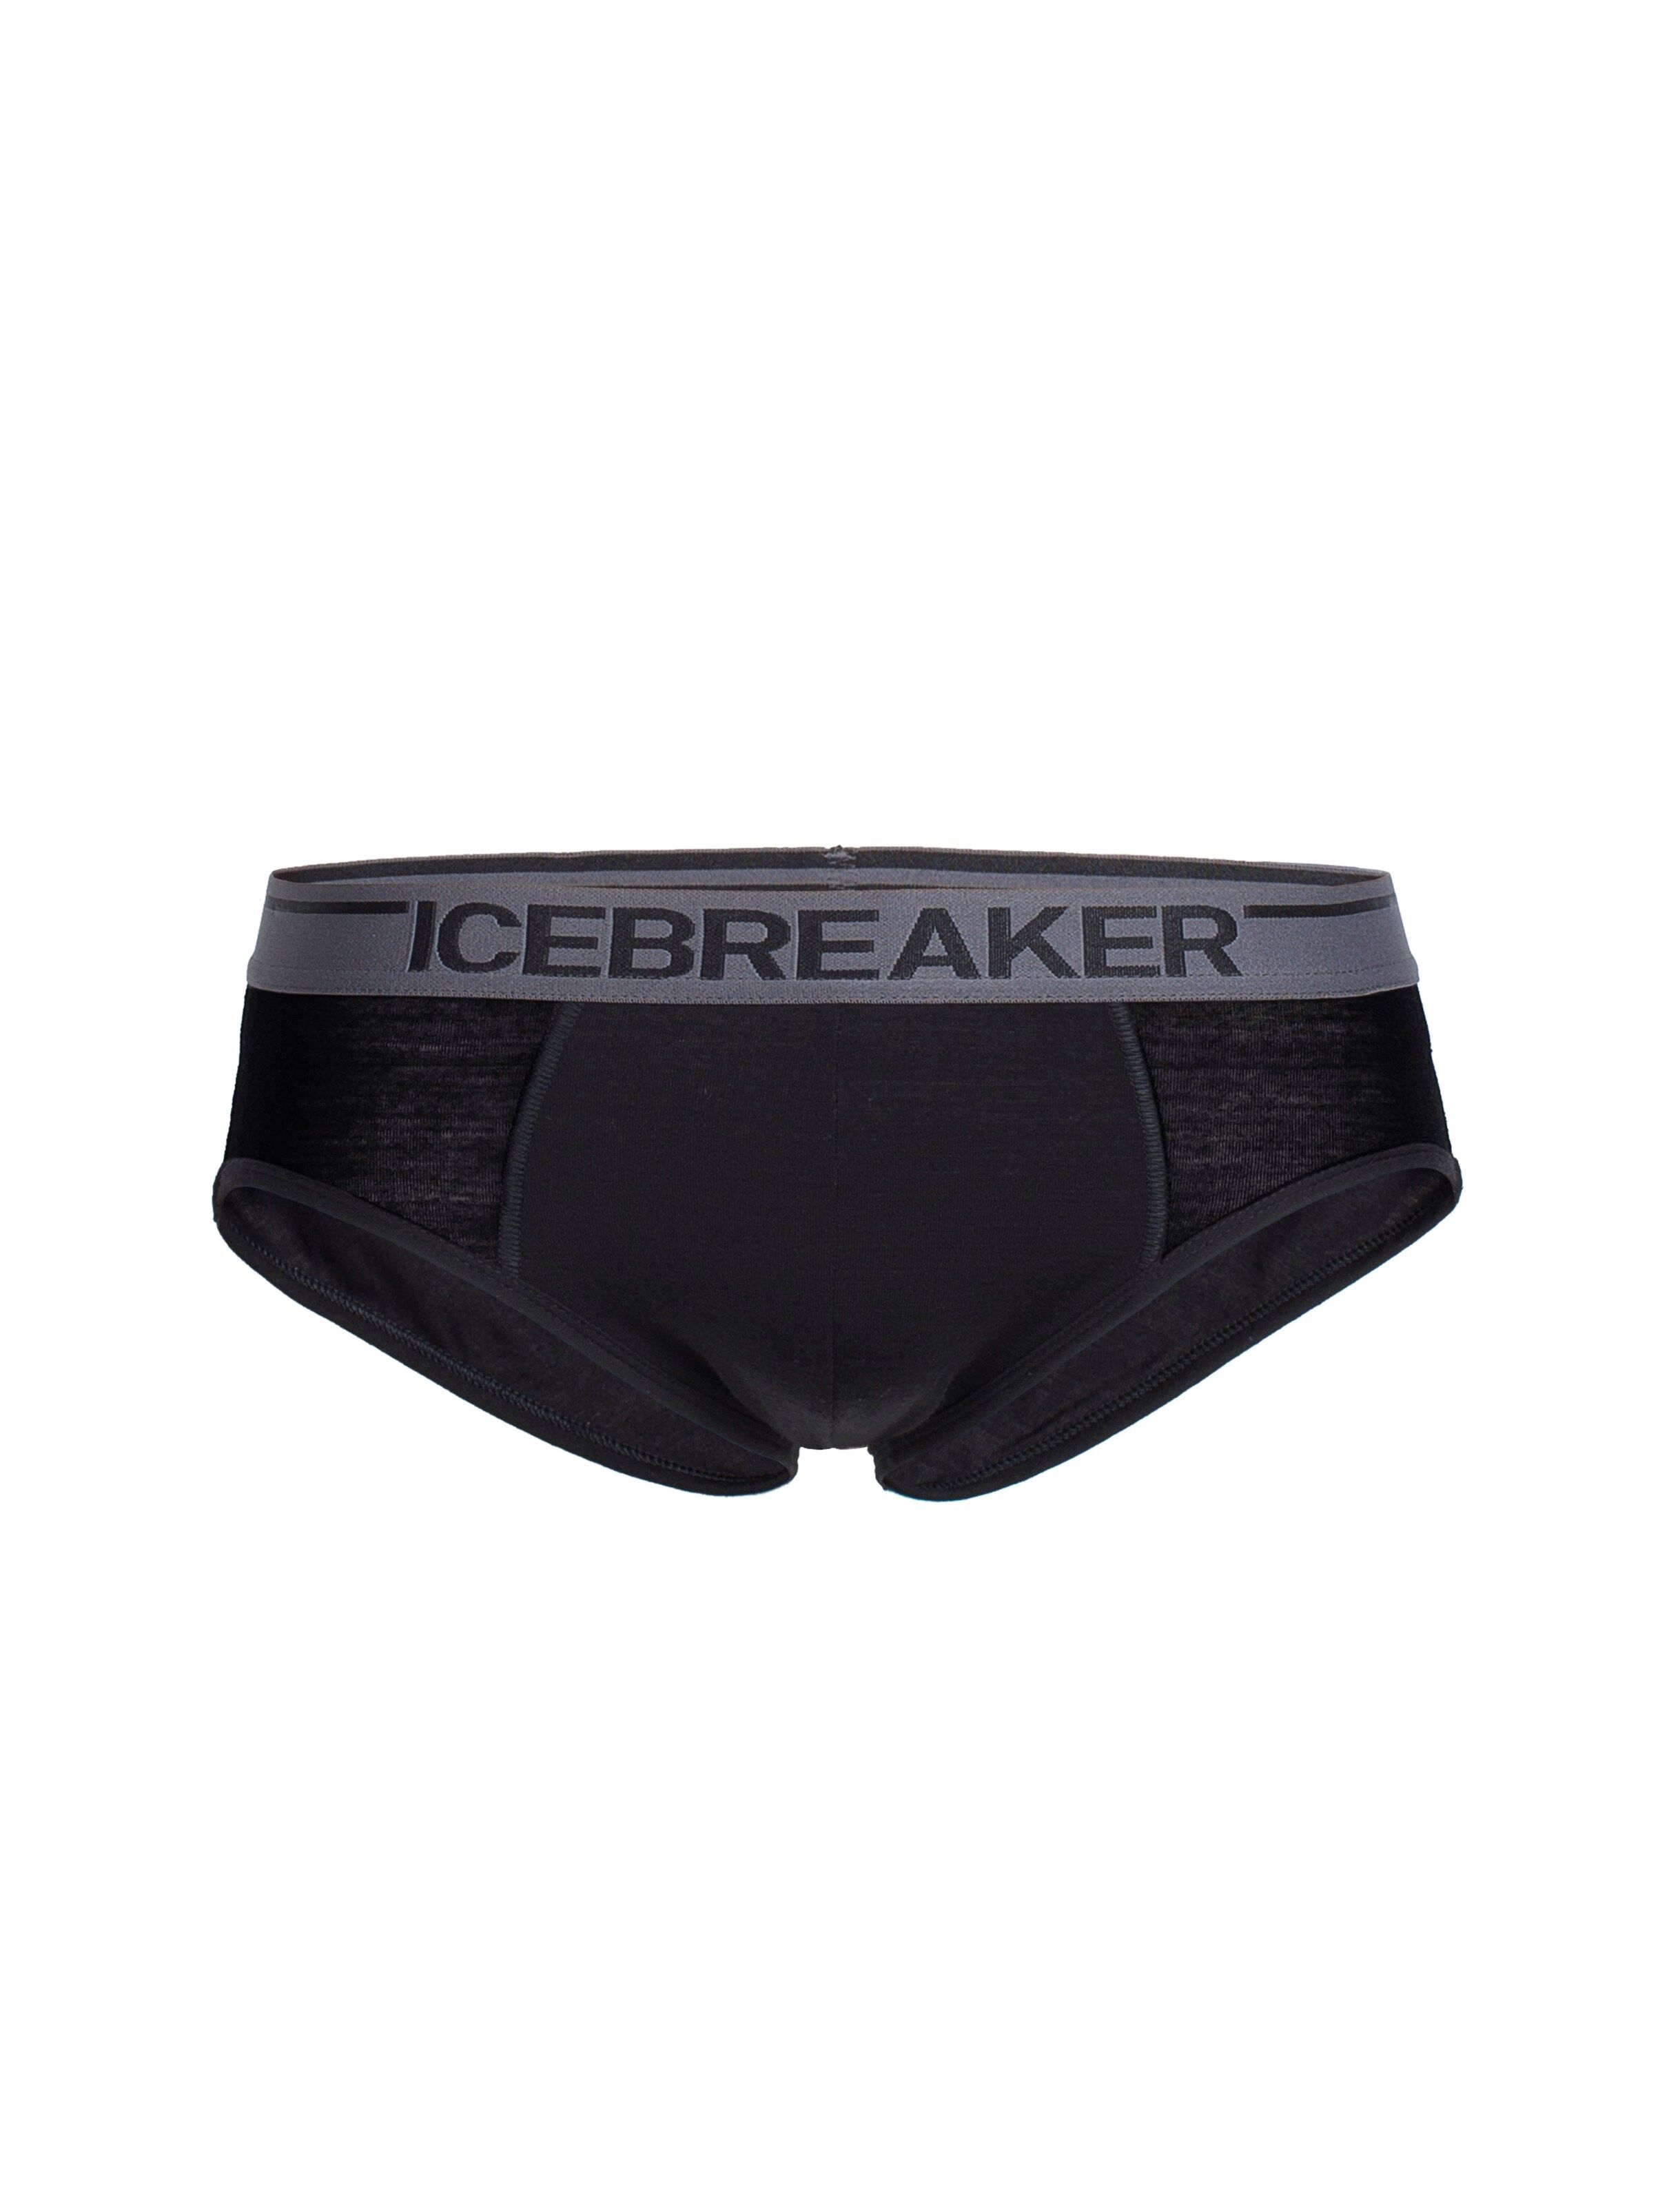 Icebreaker Anatomica Briefs, undertøy herre Black 103031001 L 2019